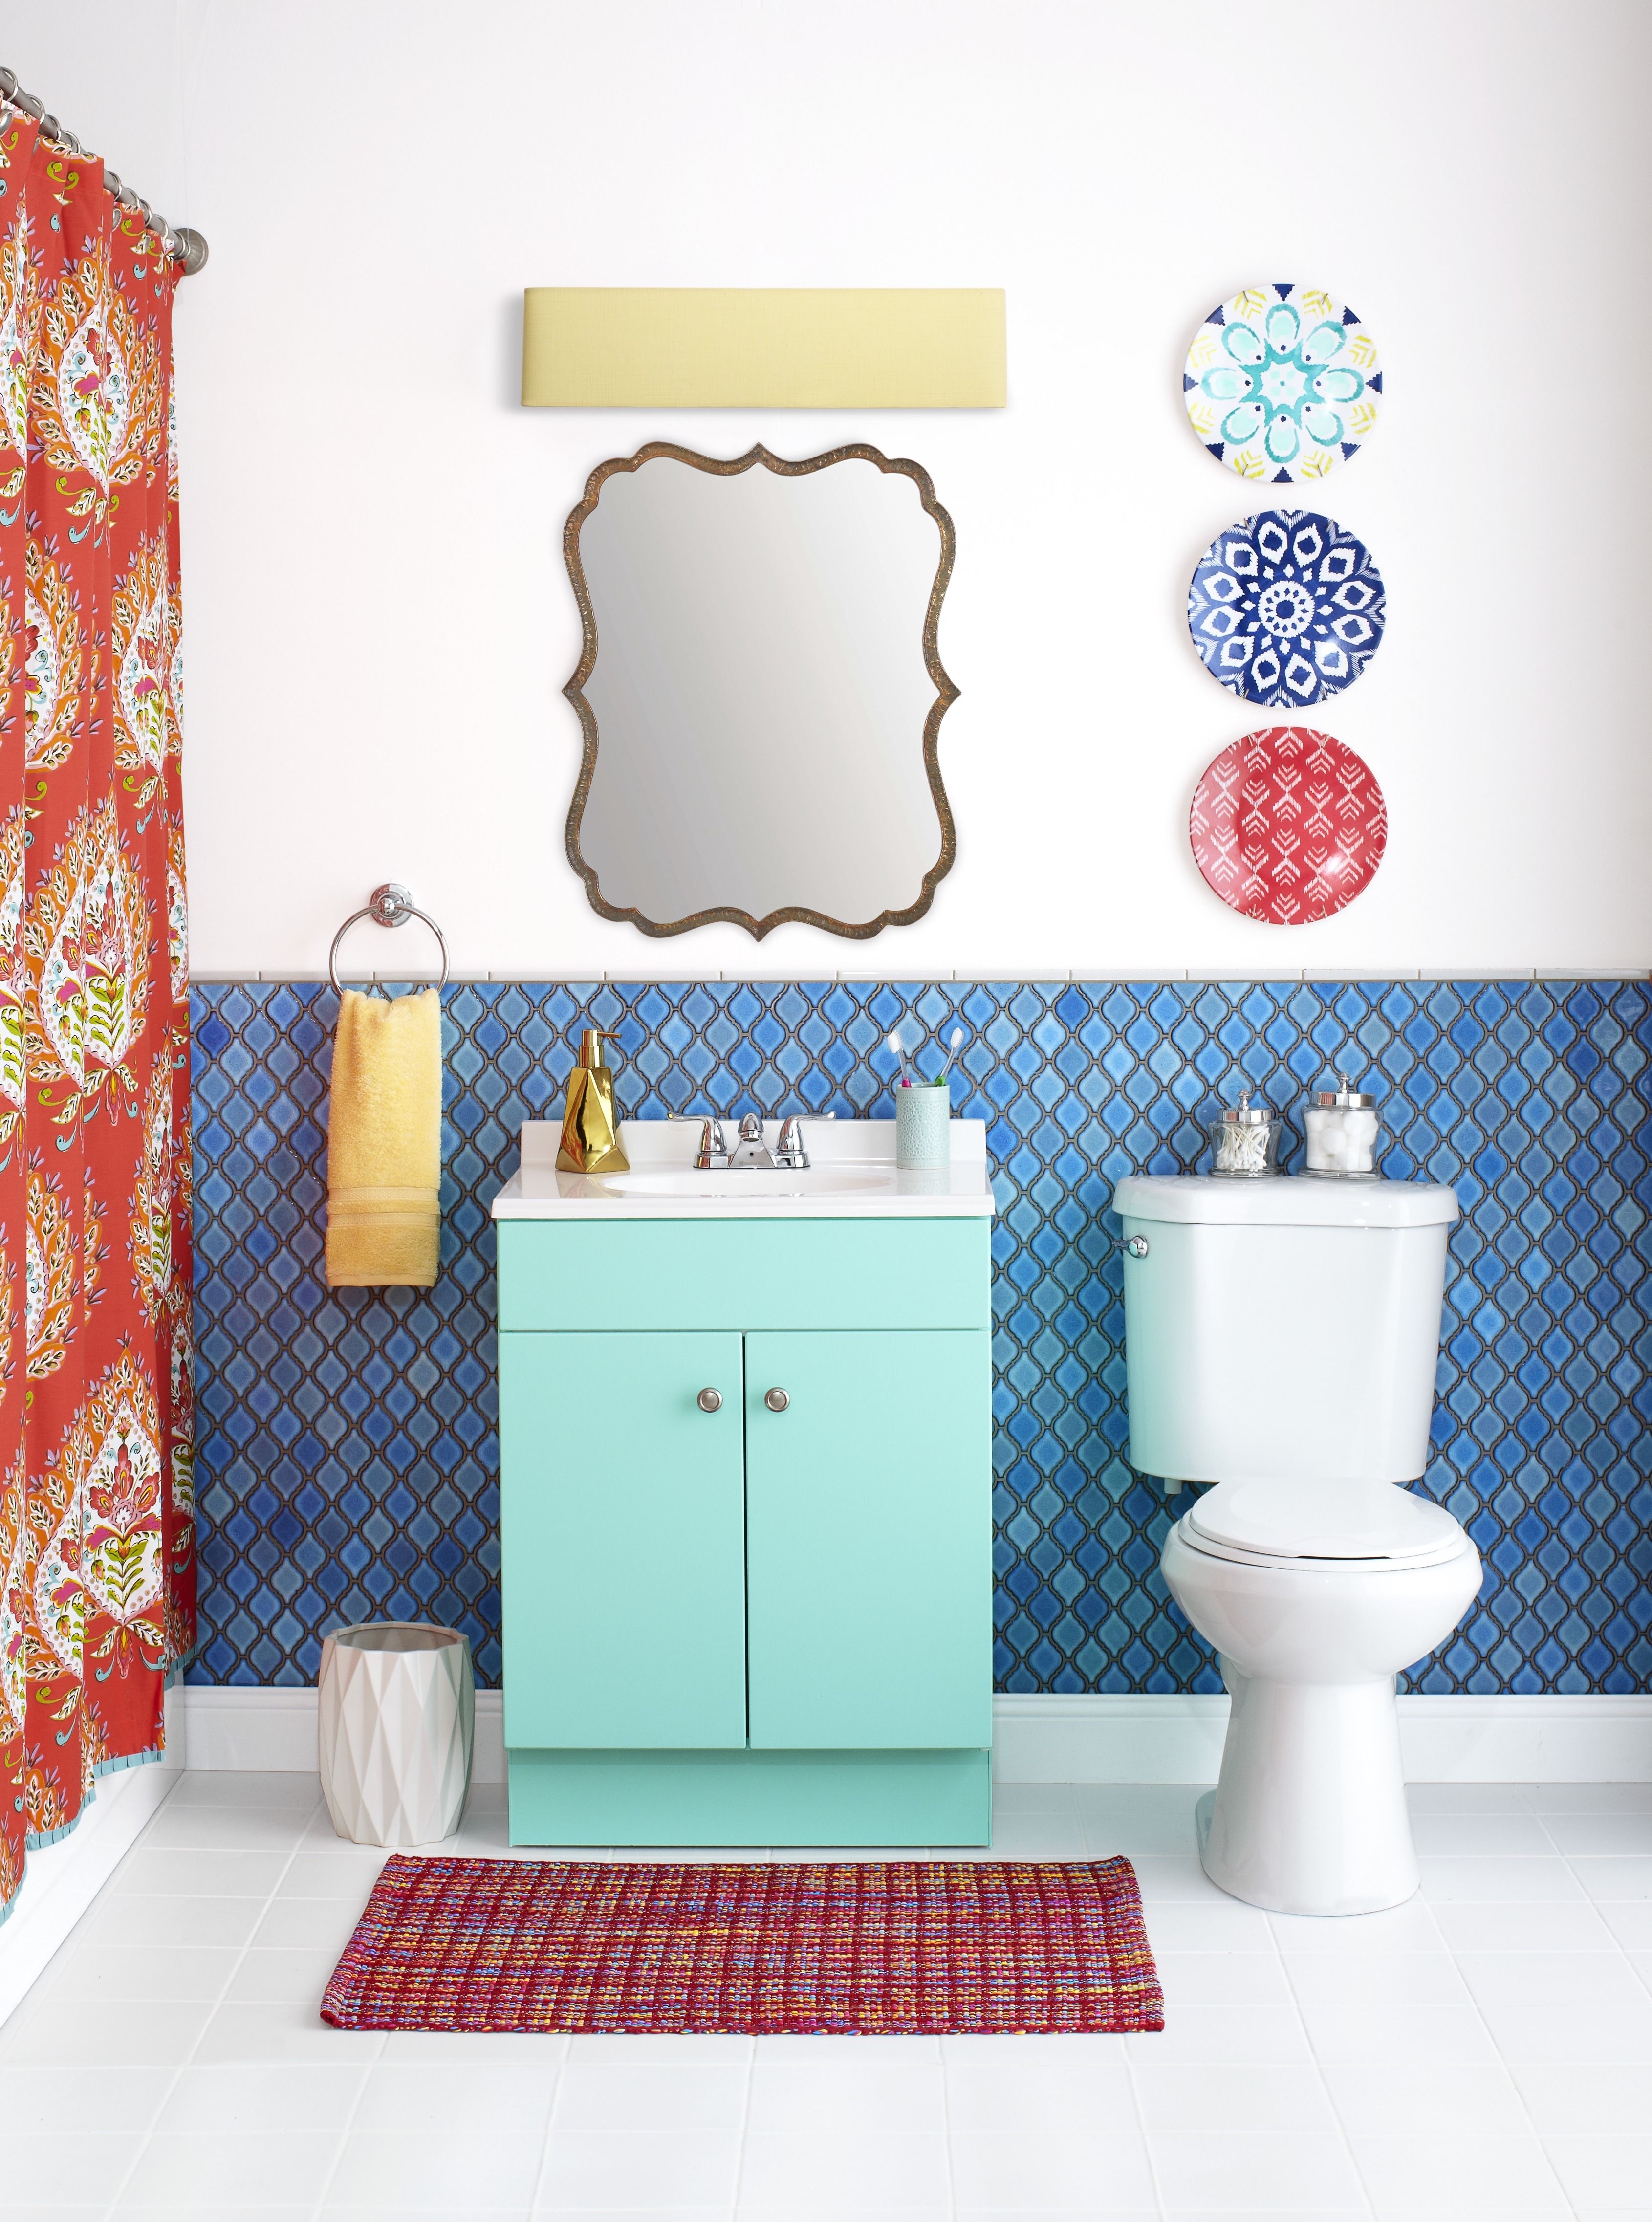 55 Bathroom Decorating Ideas Pictures, Simple Bathroom Decor